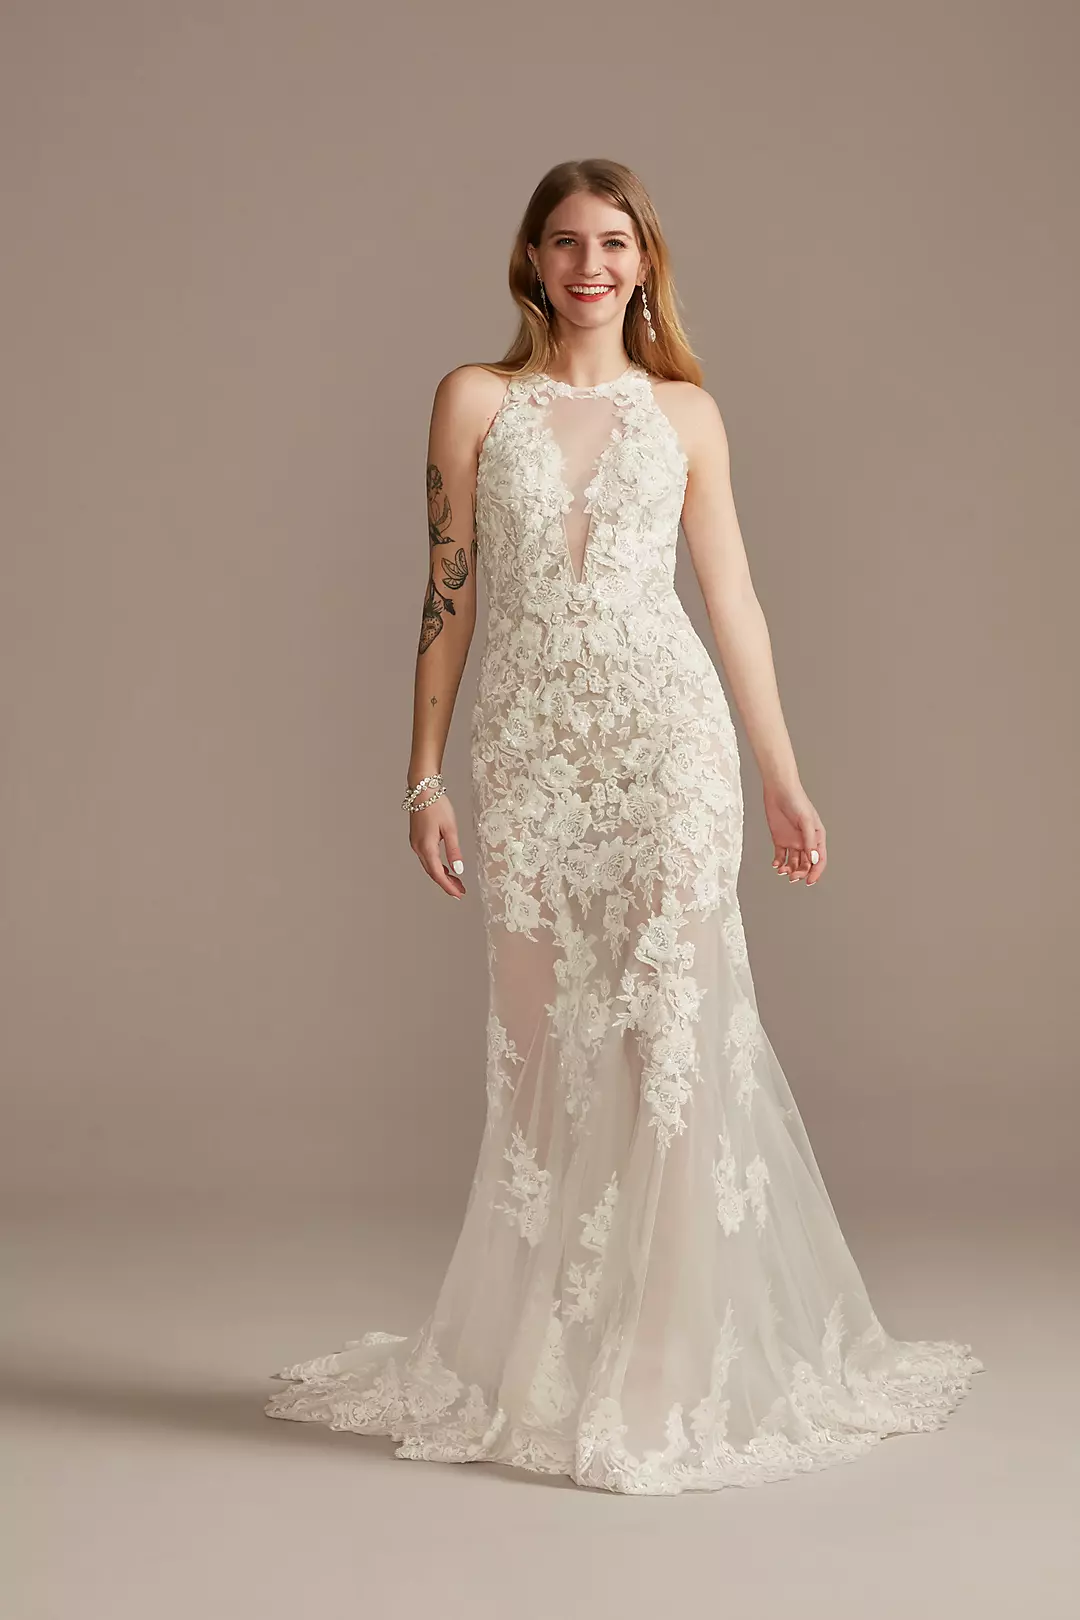 Illusion Sequin Floral Applique Wedding Dress Image